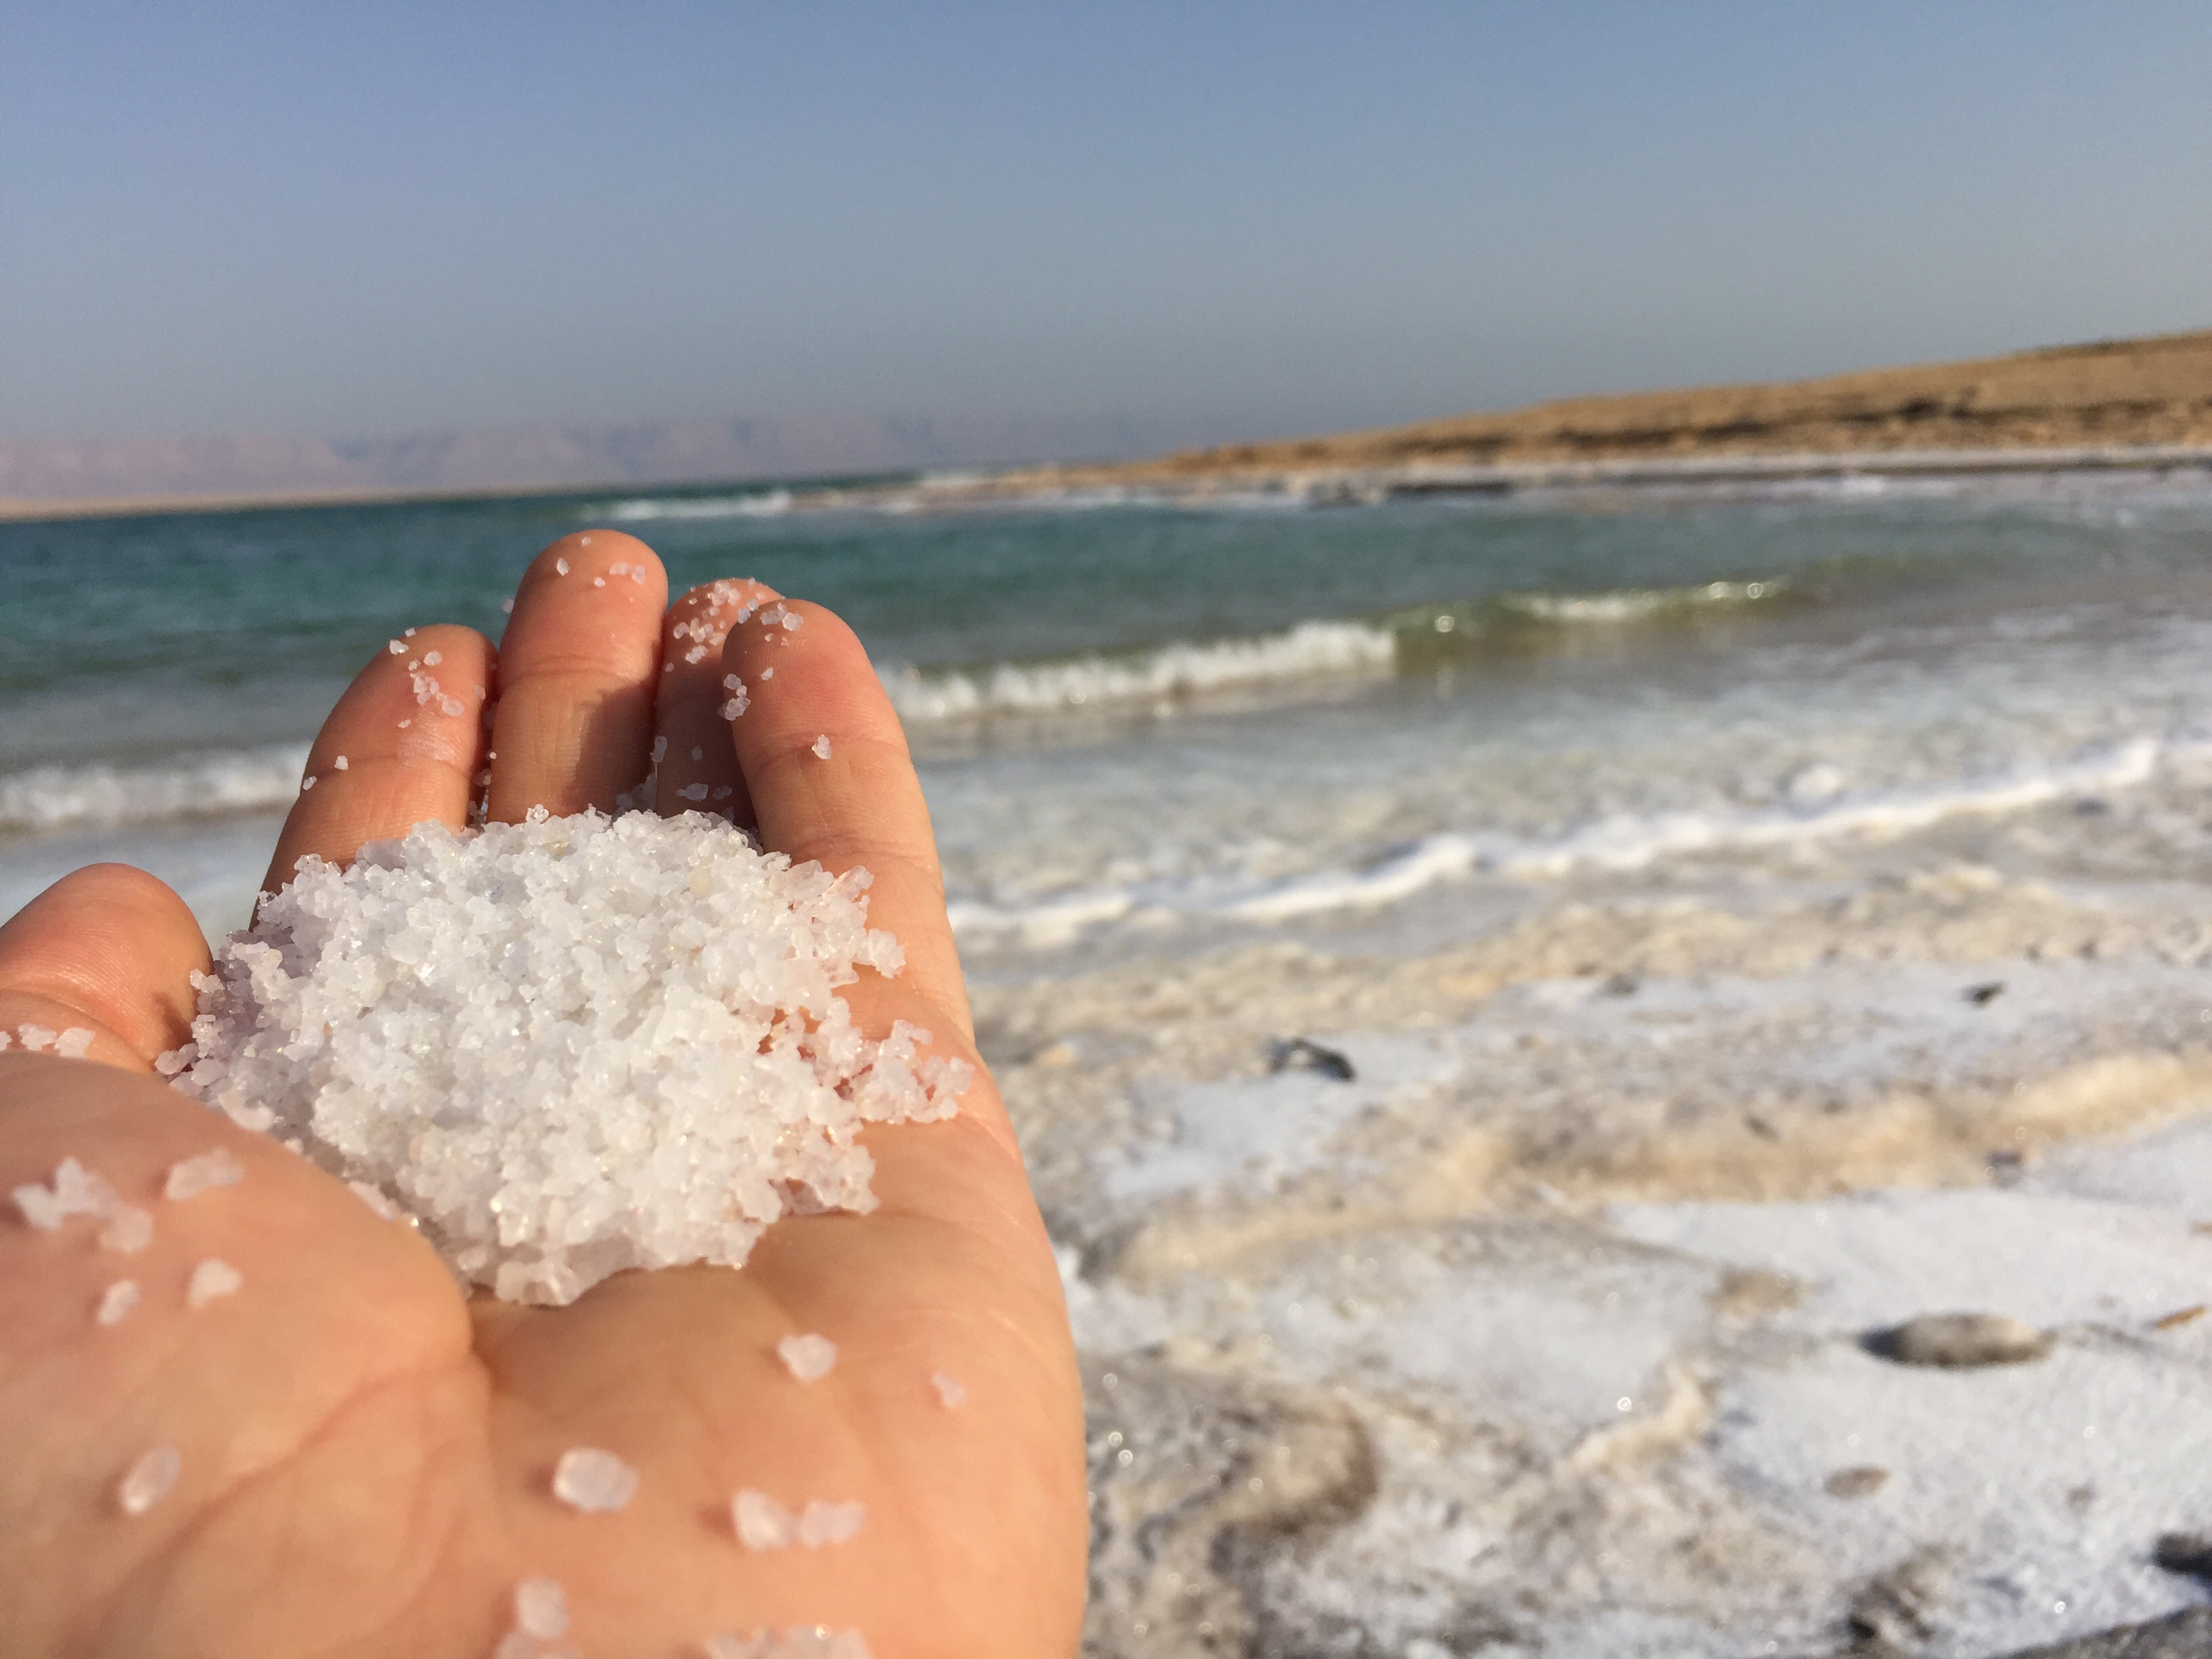 Jordan, Israel & The Dead Sea Experience